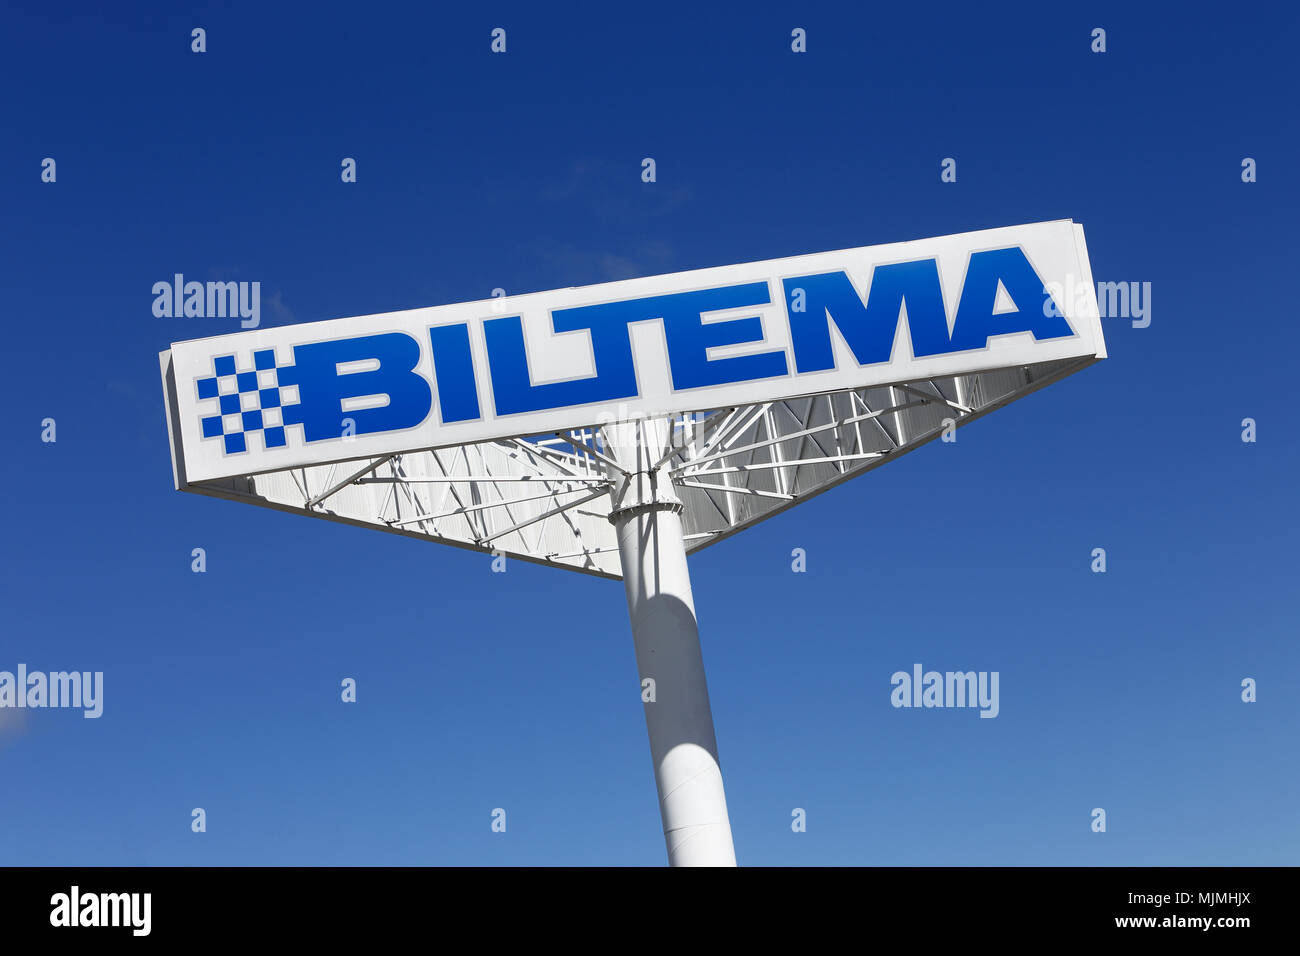 Biltema logo hi-res stock photography and images - Alamy